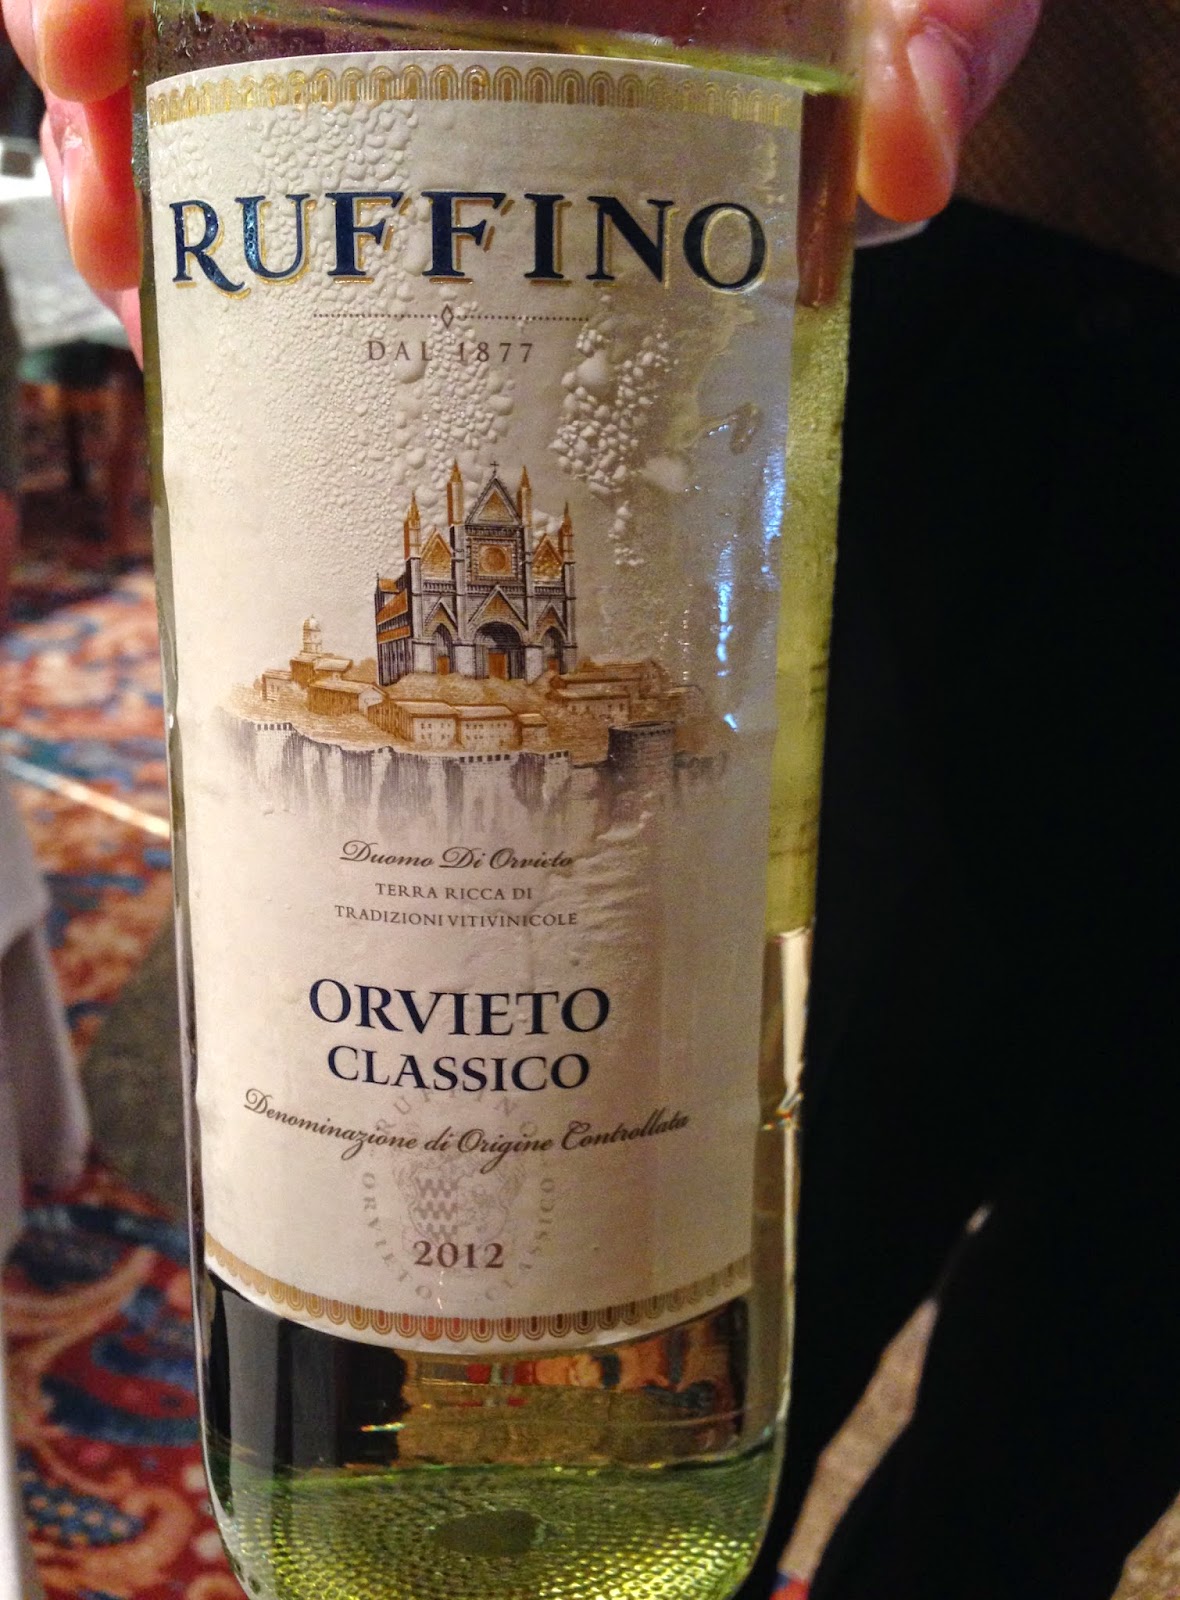 Rượu vang Ruffino Orvieto Classico Grechetto - Trebbiano